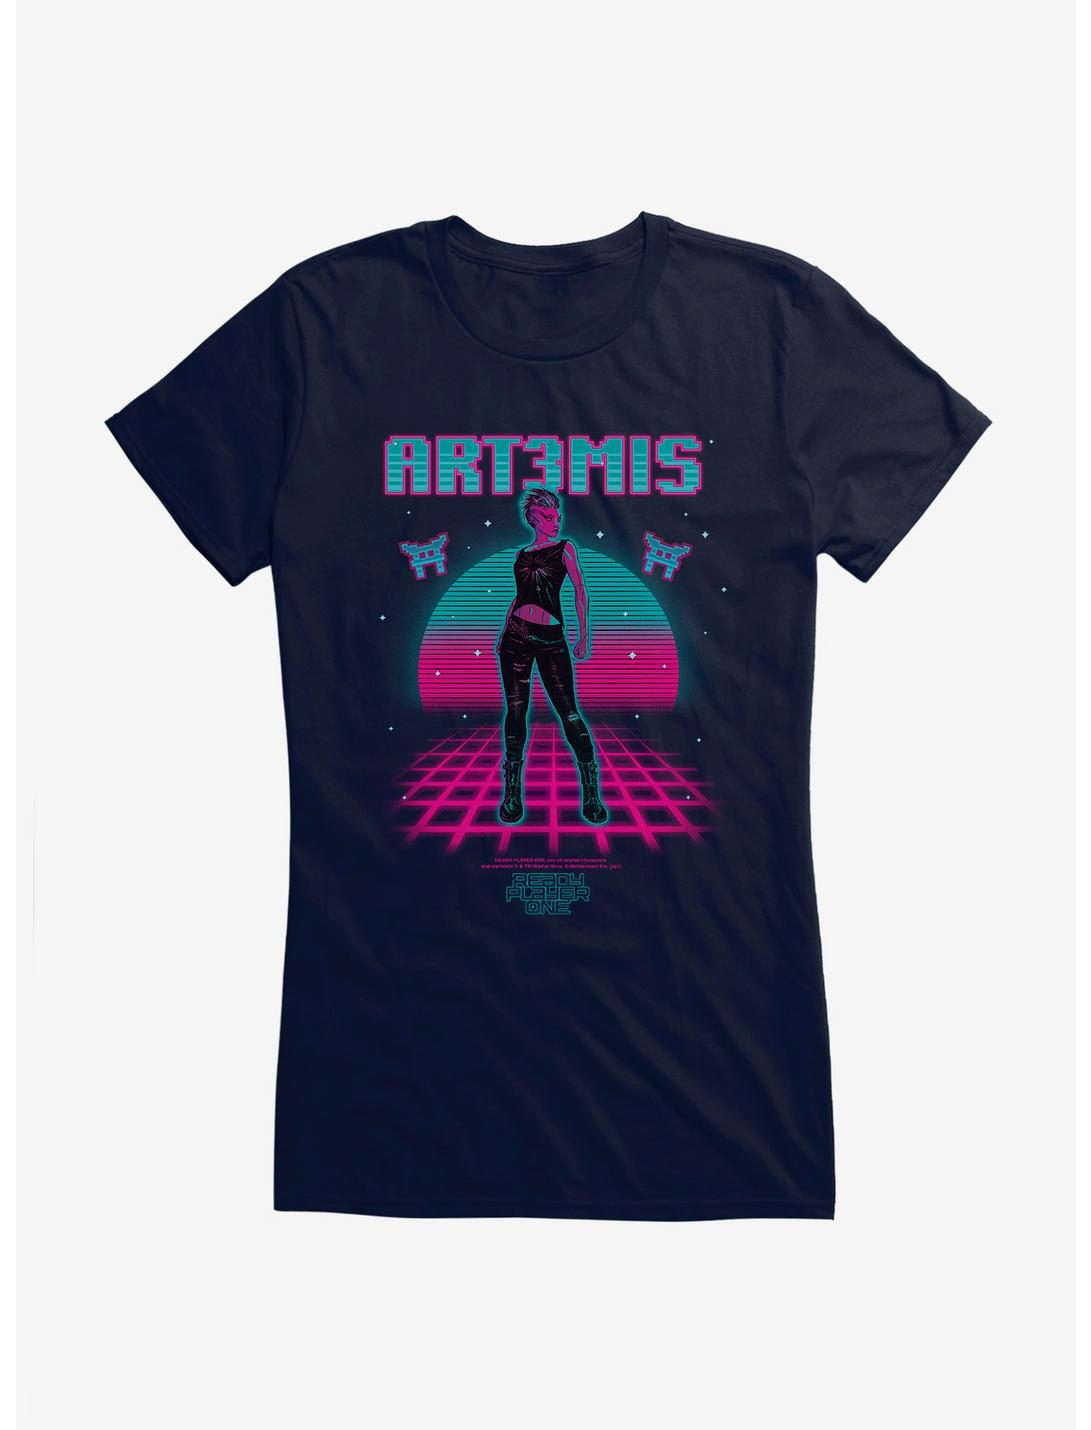 Ready Player One Art3mis Retro Girls T-Shirt, , hi-res